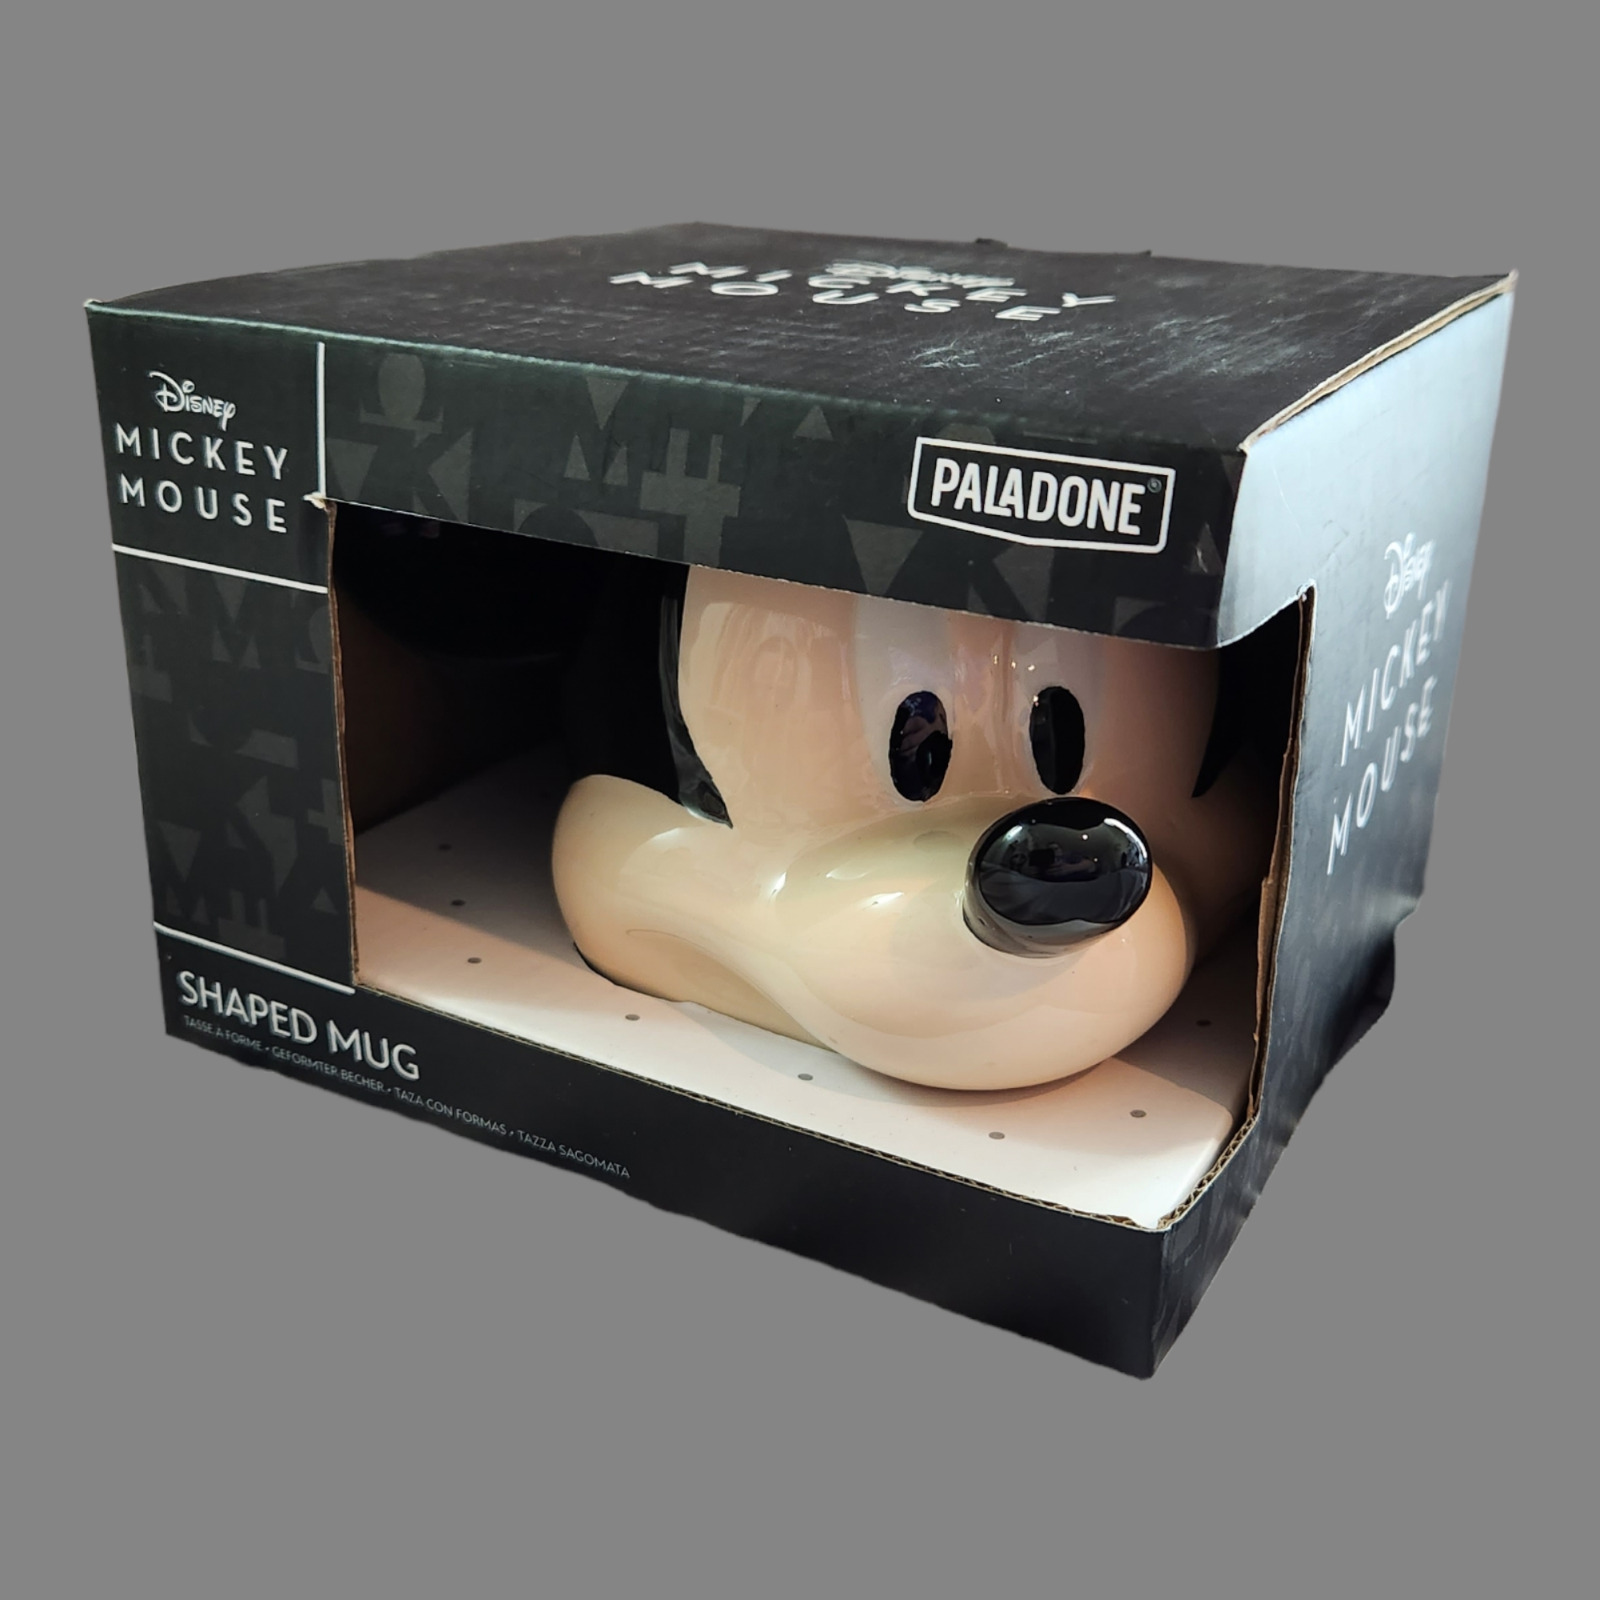 NEW Paladone Disney Mickey Mouse Shaped Mug in Original Package Ceramic Black